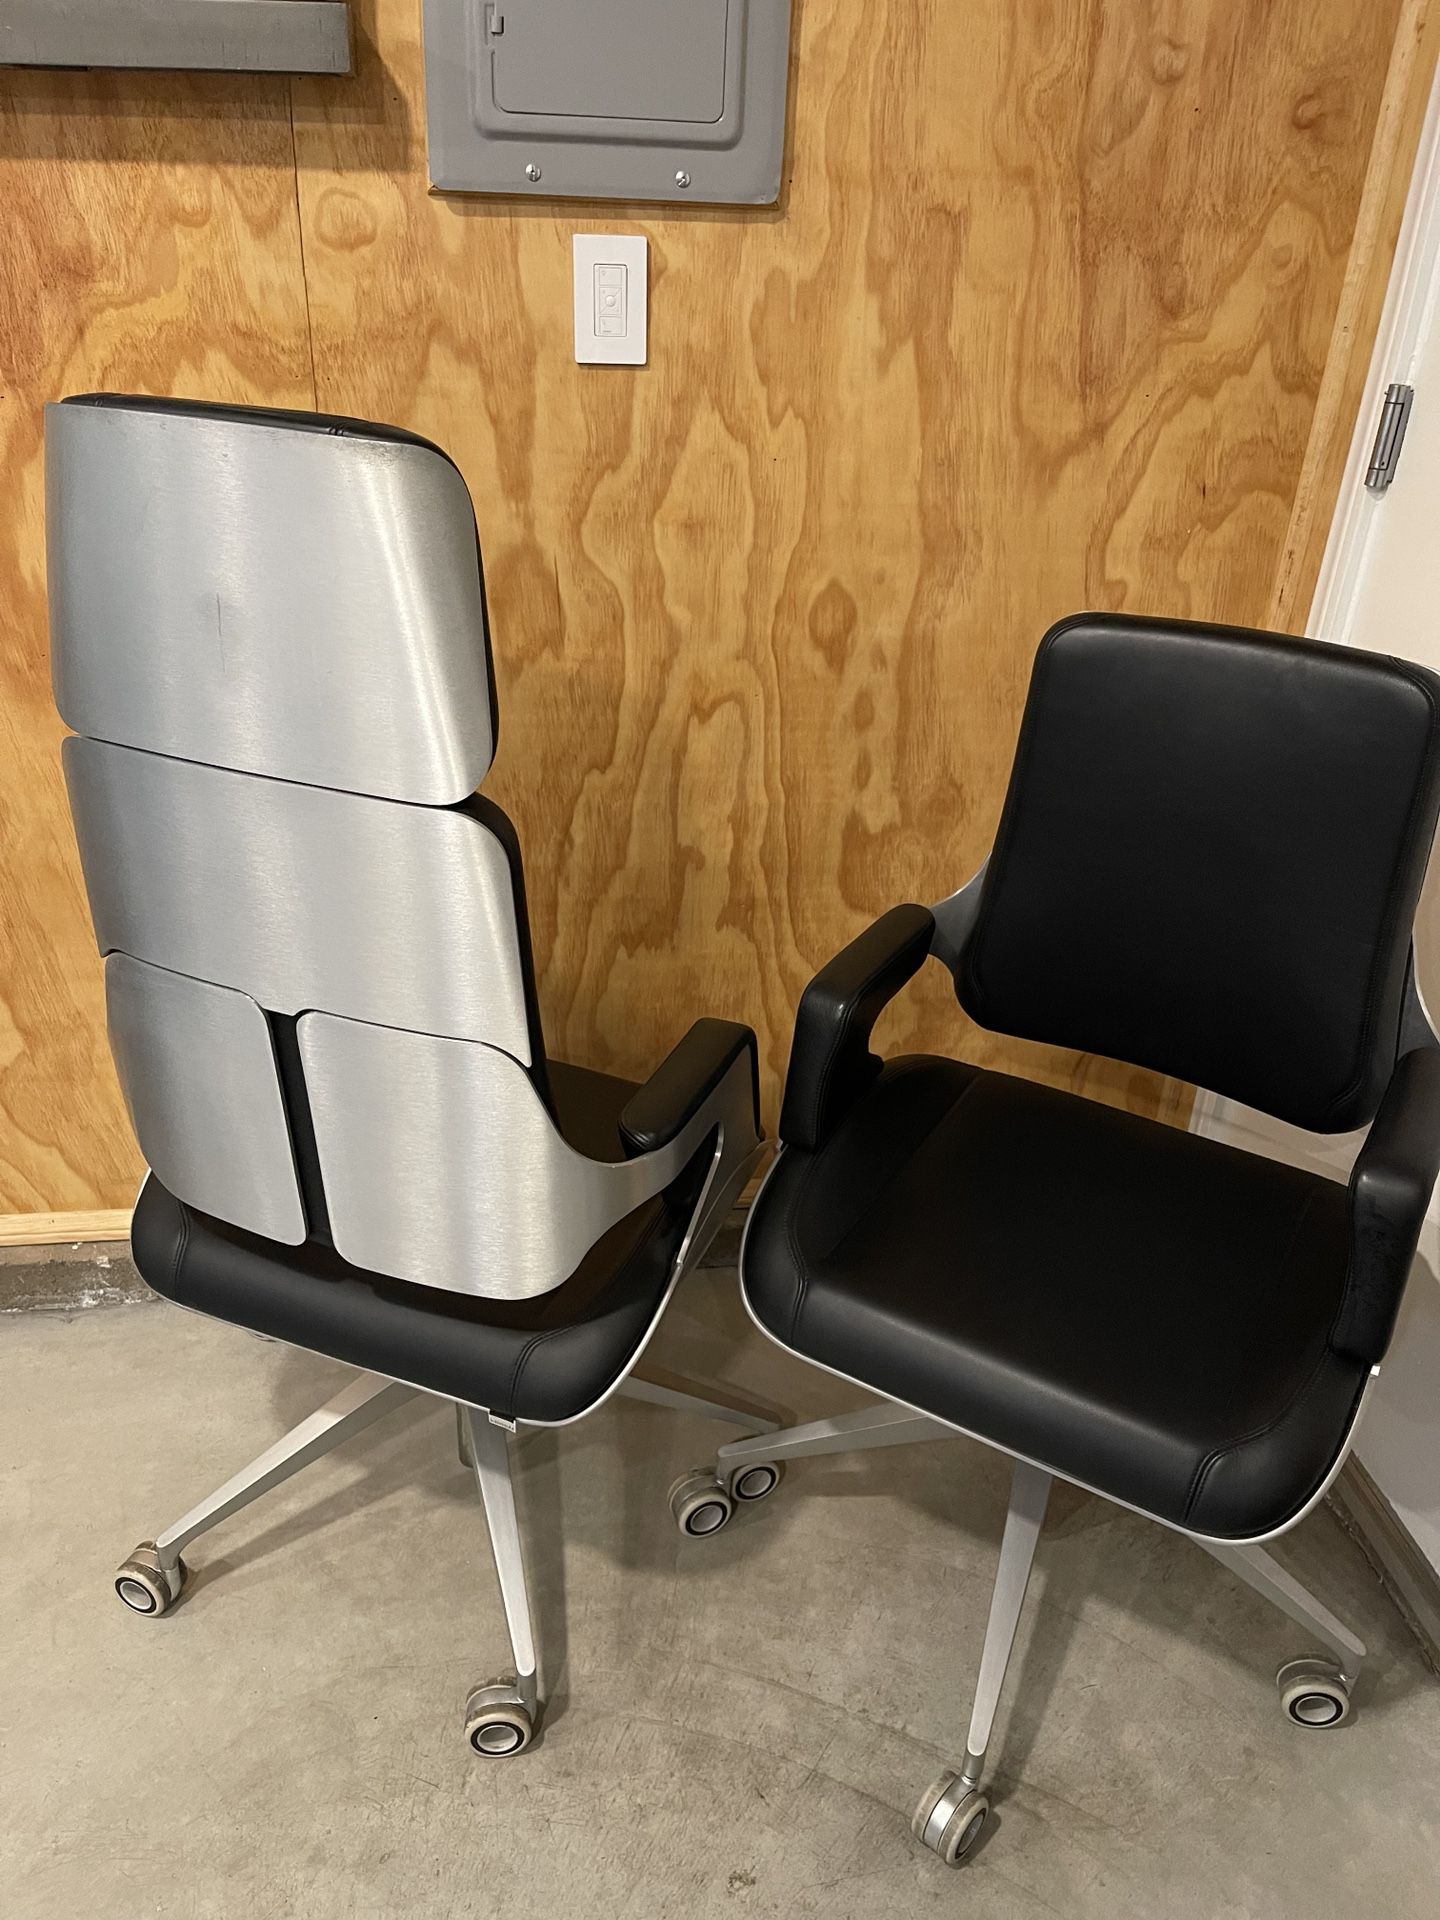 Interstuhl office desk chairs